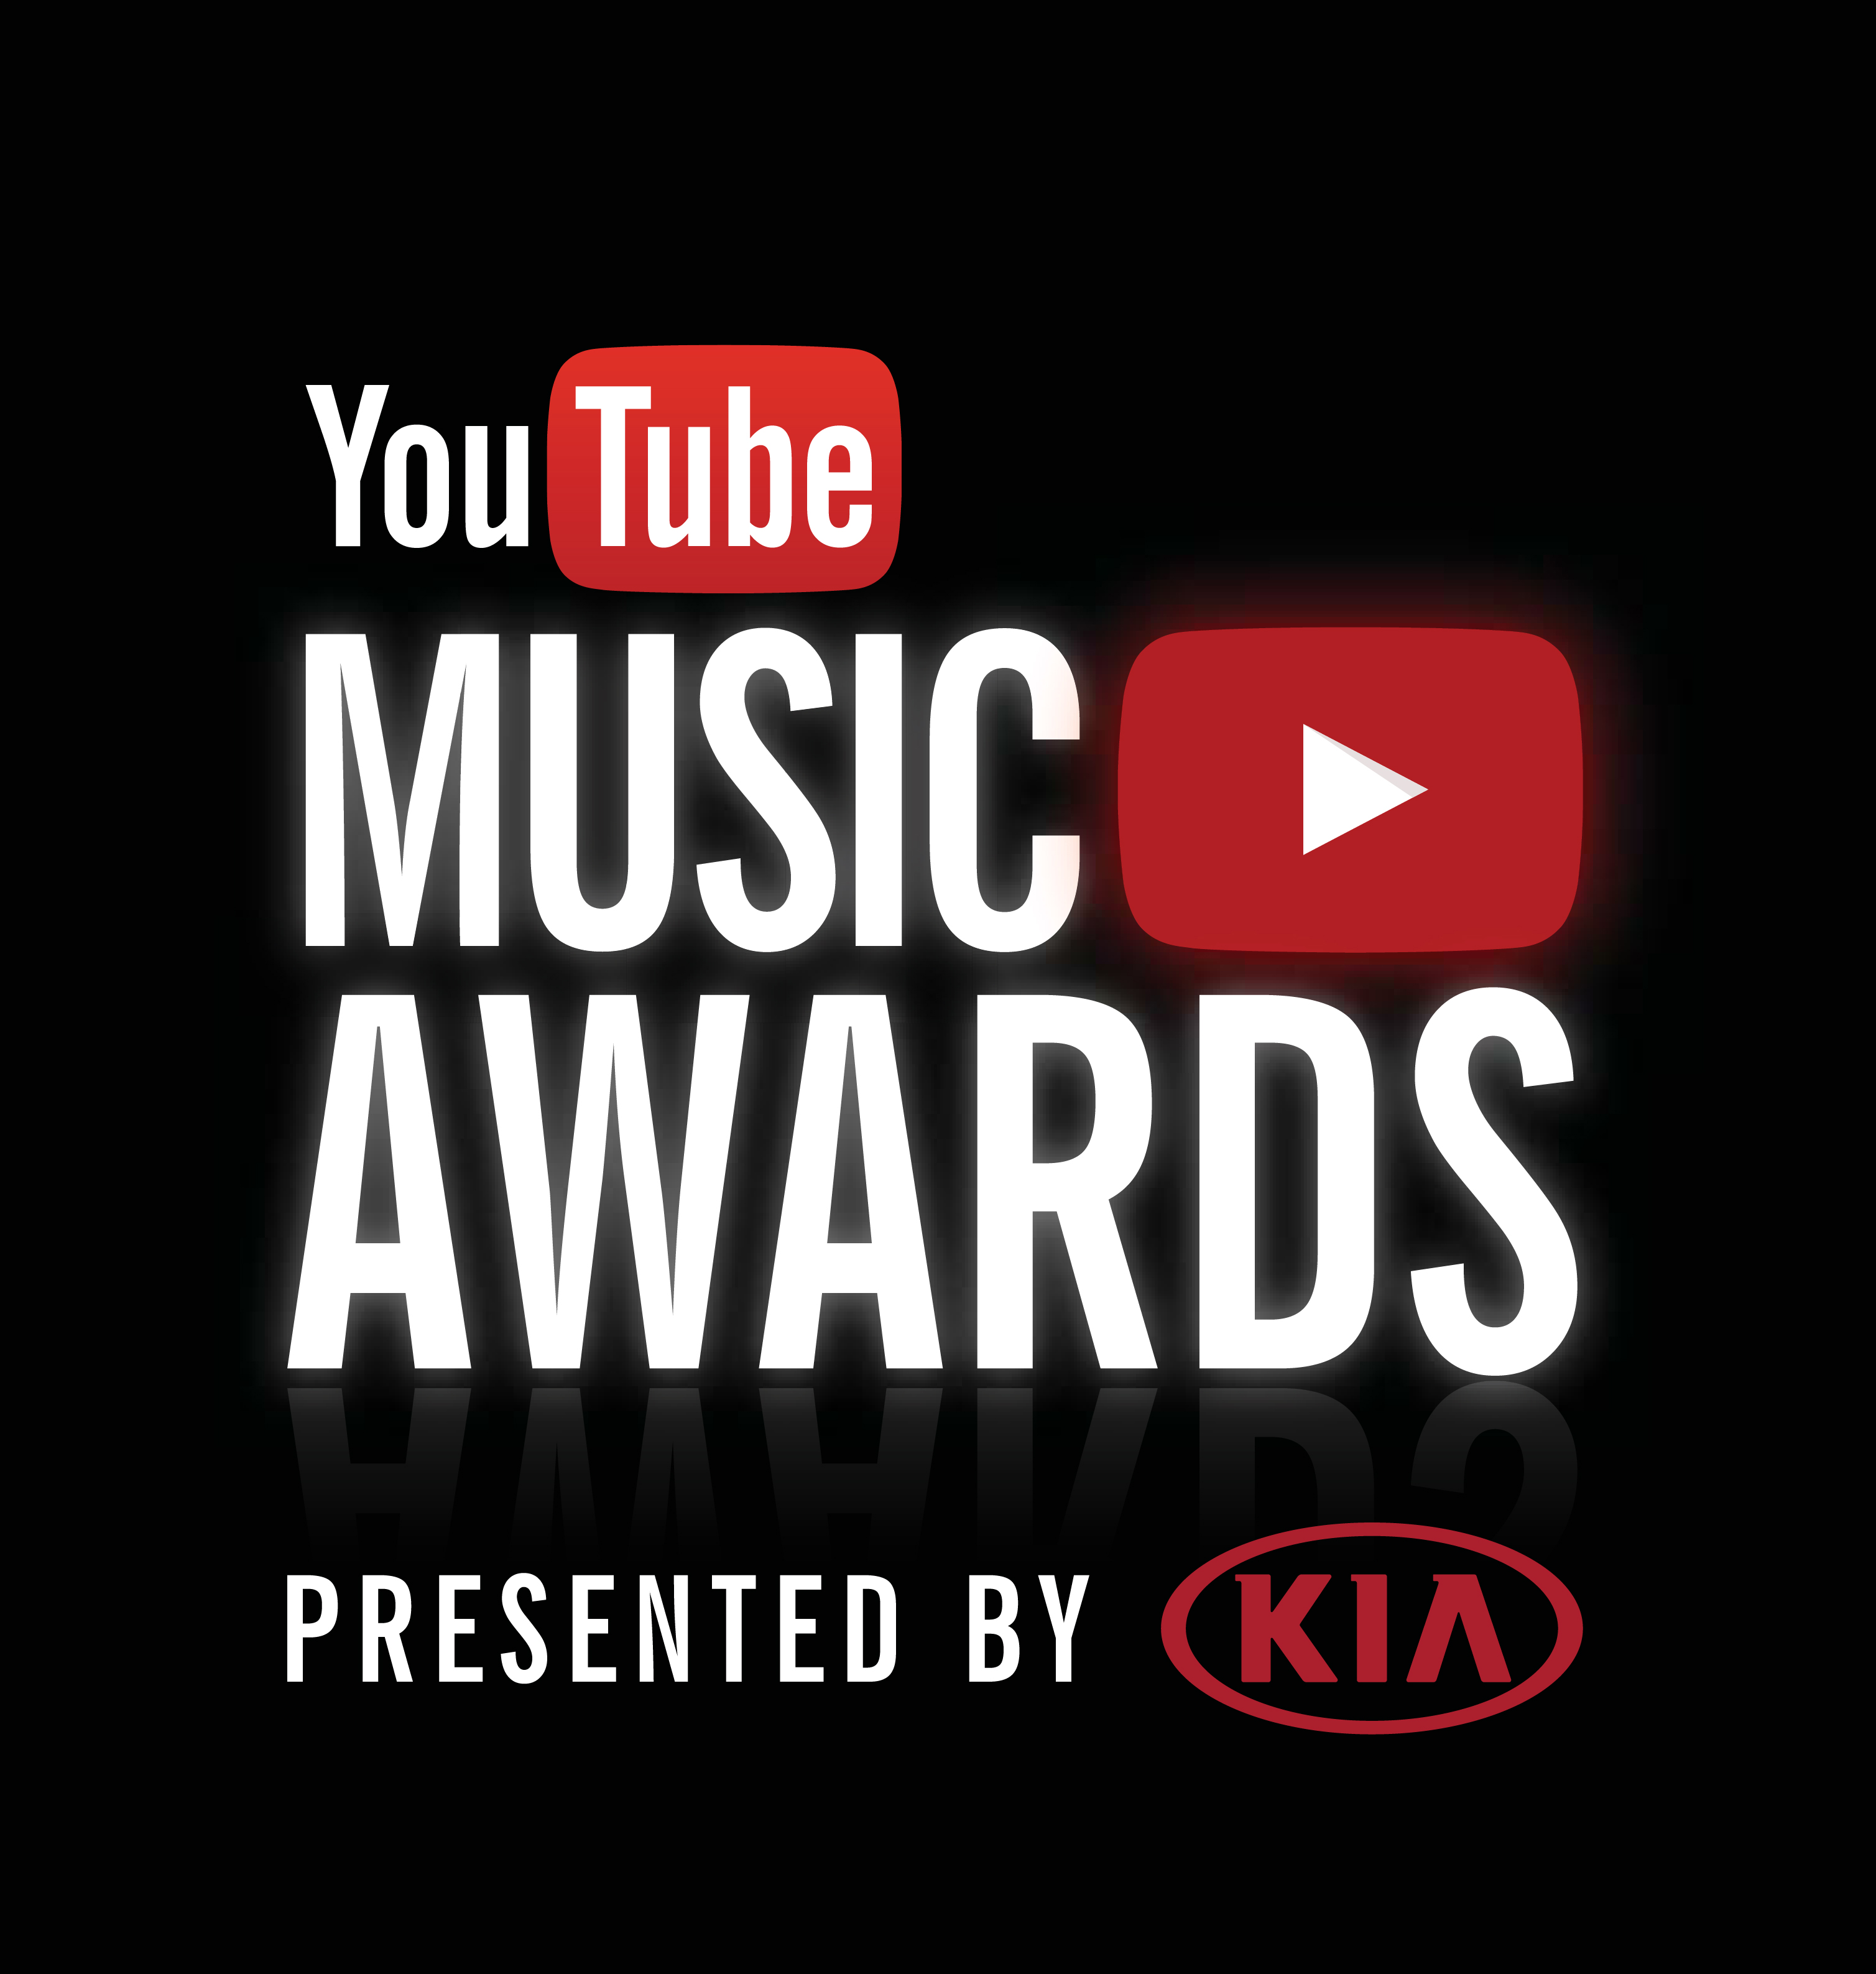  YouTube Music Awards: Kia è sempre protagonista